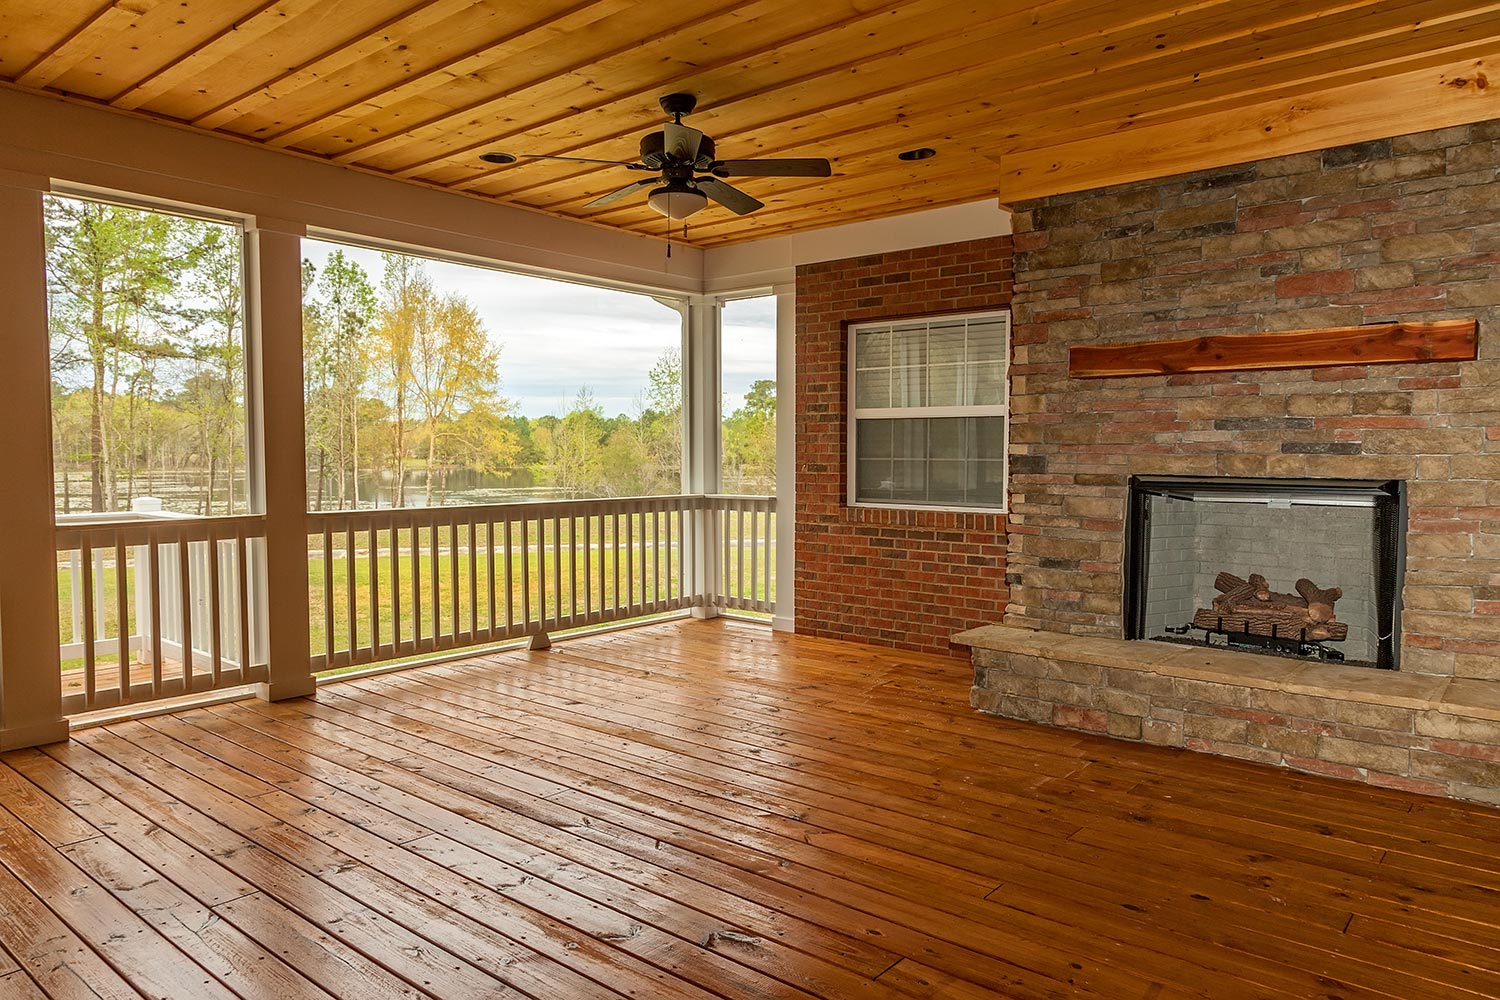 New backyard deck with fireplace overlooking lake